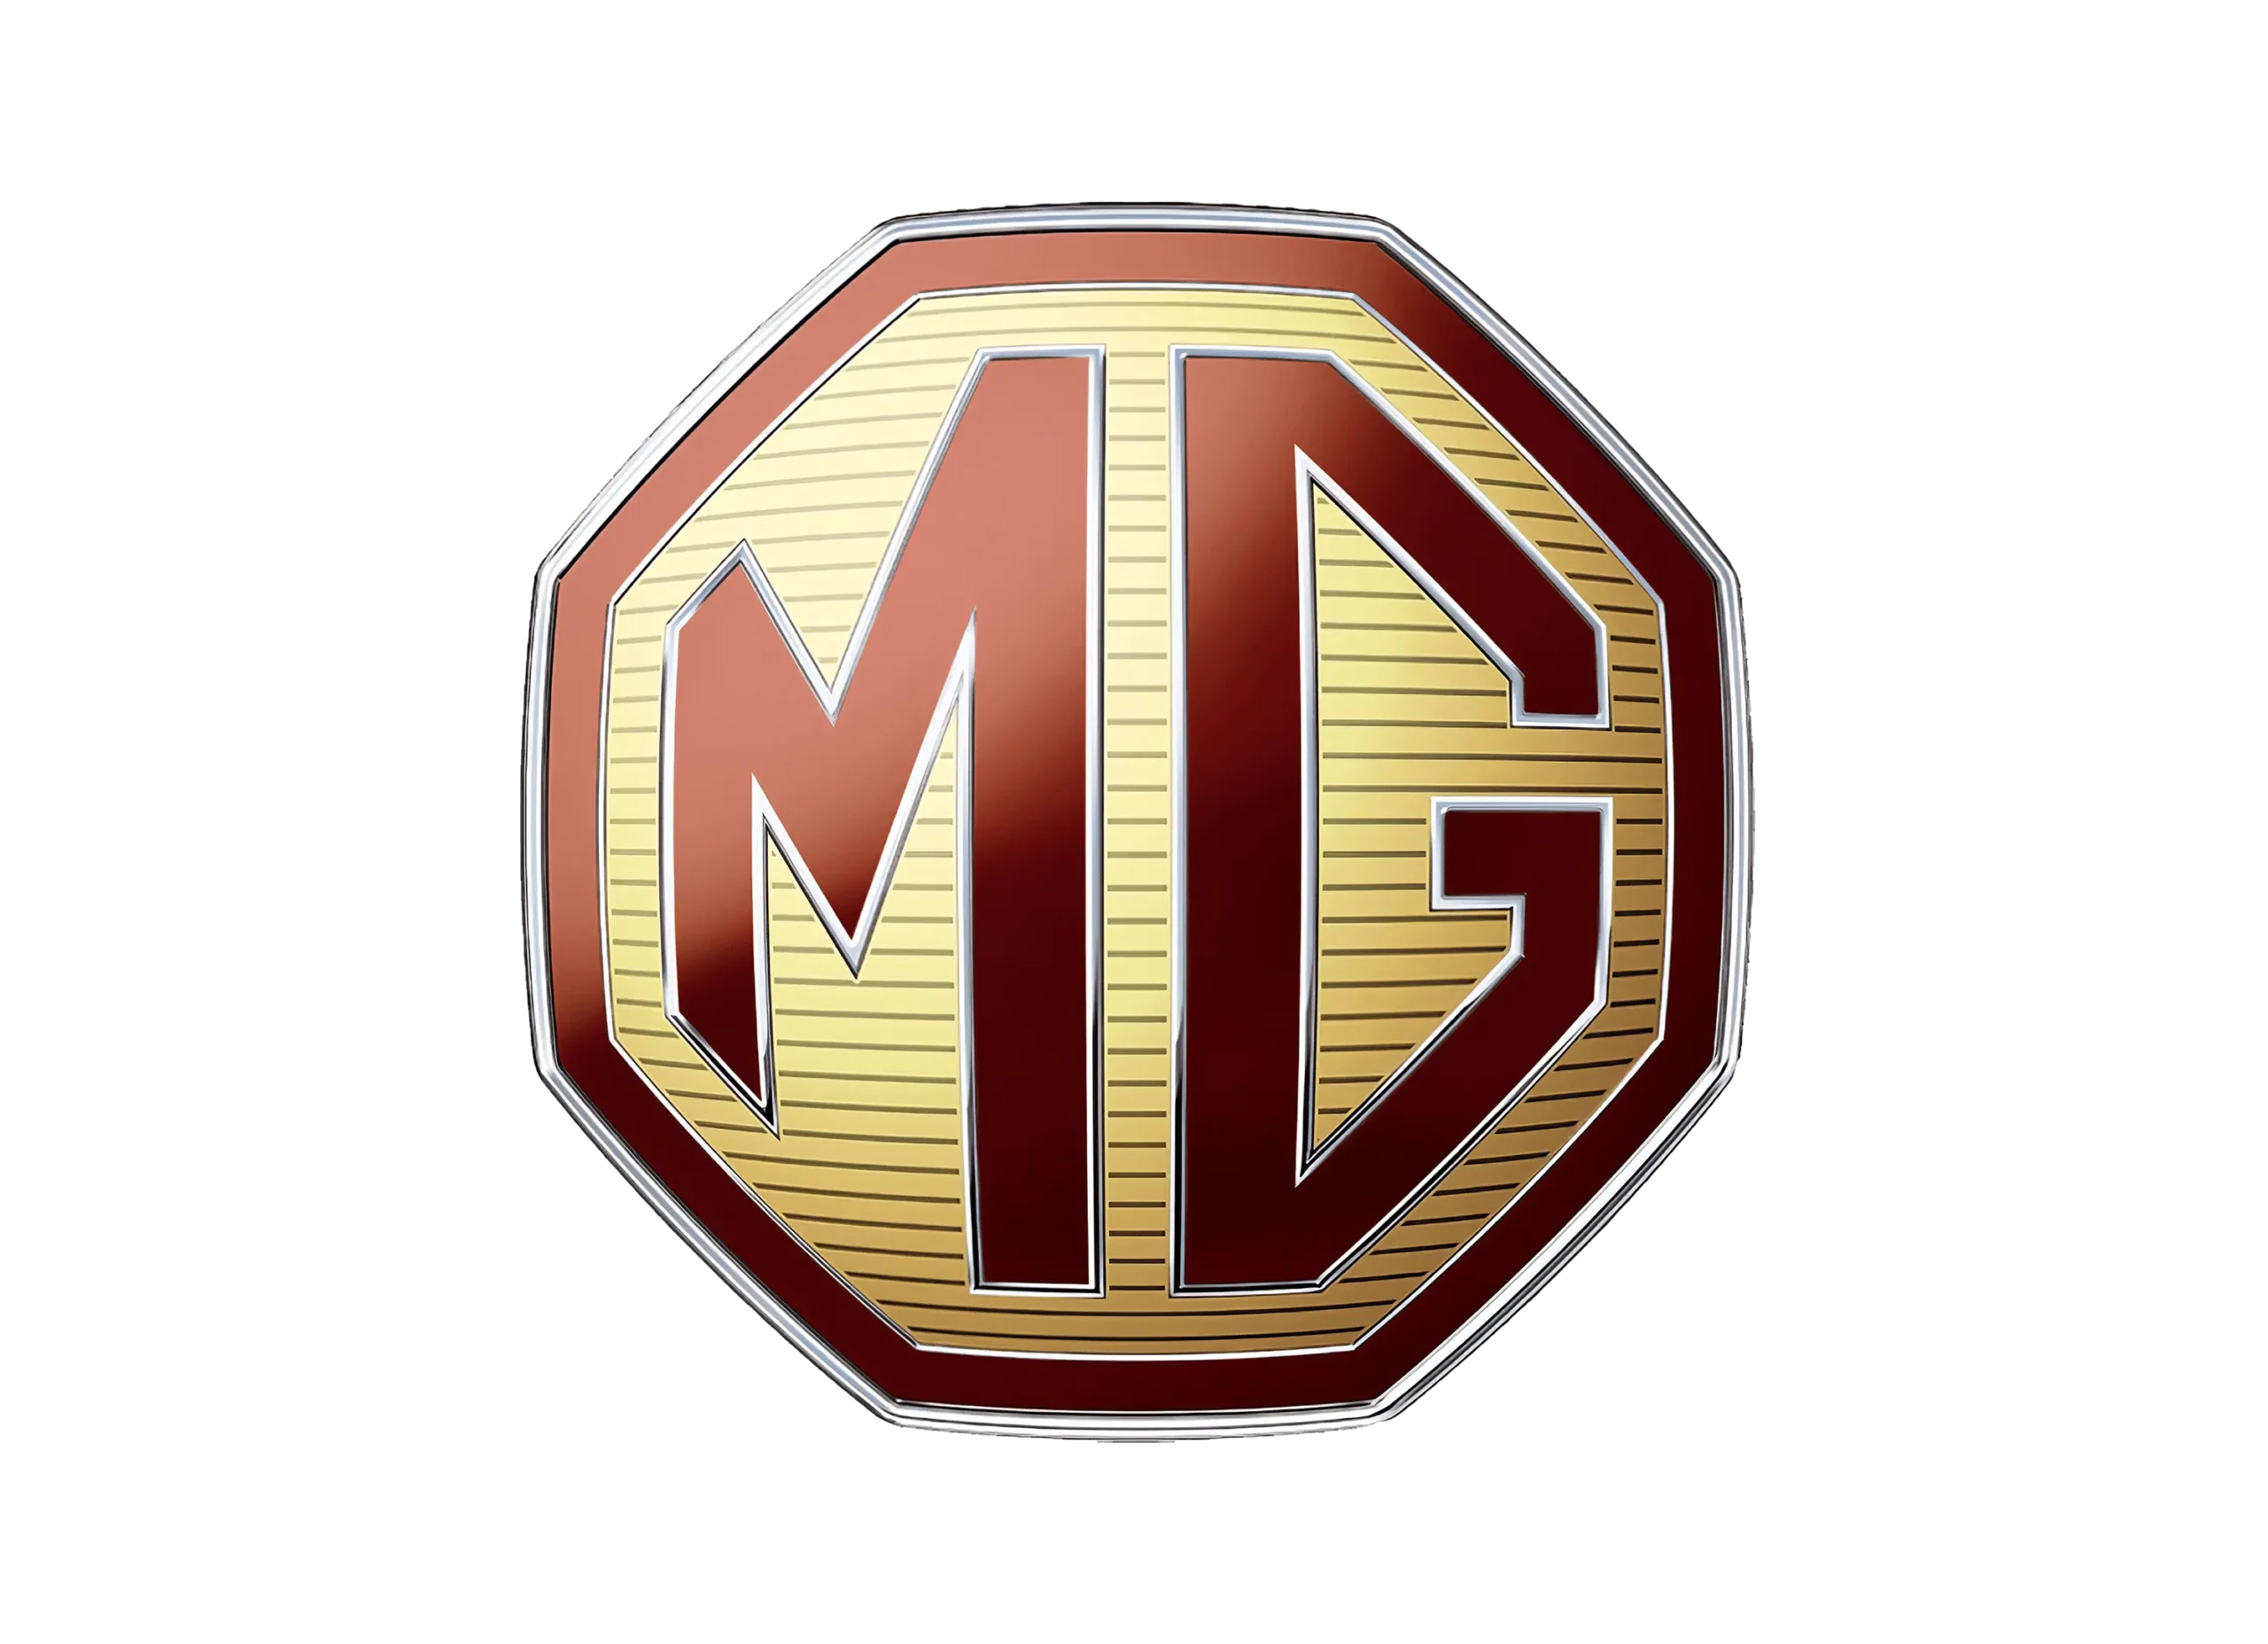 MG logo 1990-2011